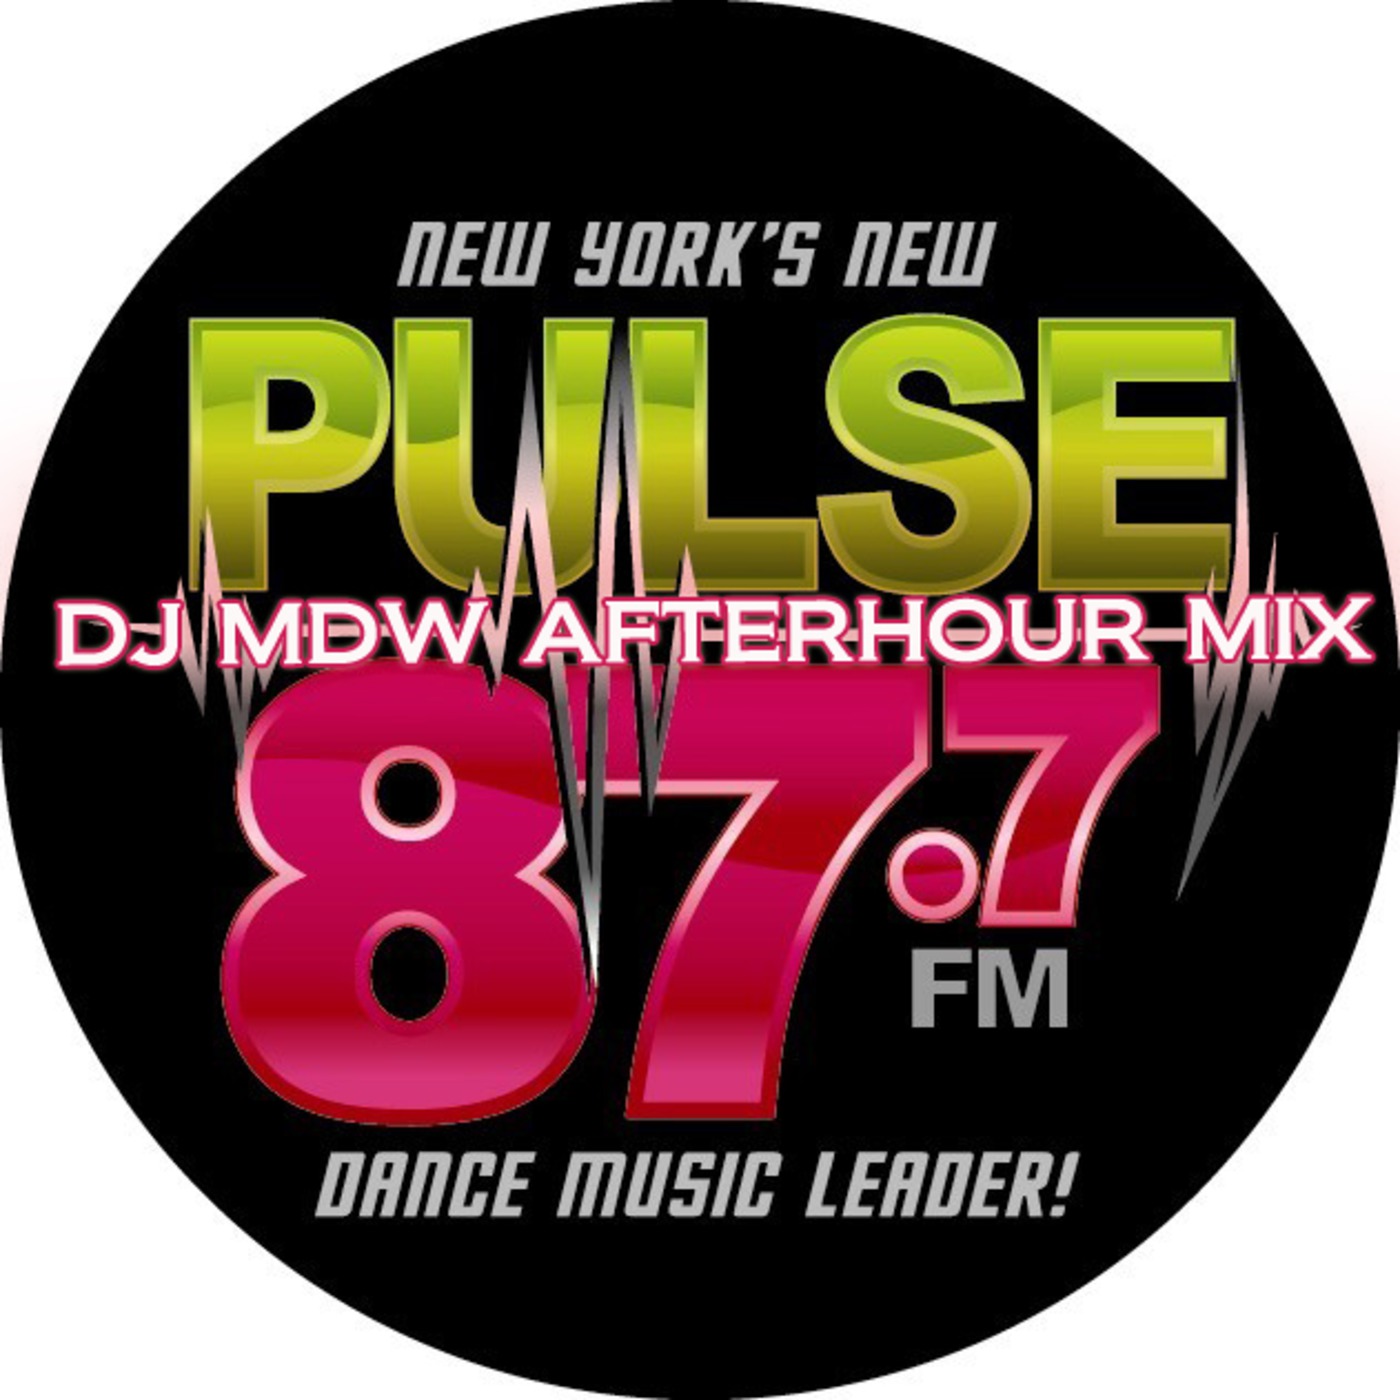 DJ MDW PULSE 87.7 FM AFTERHOURS MIX